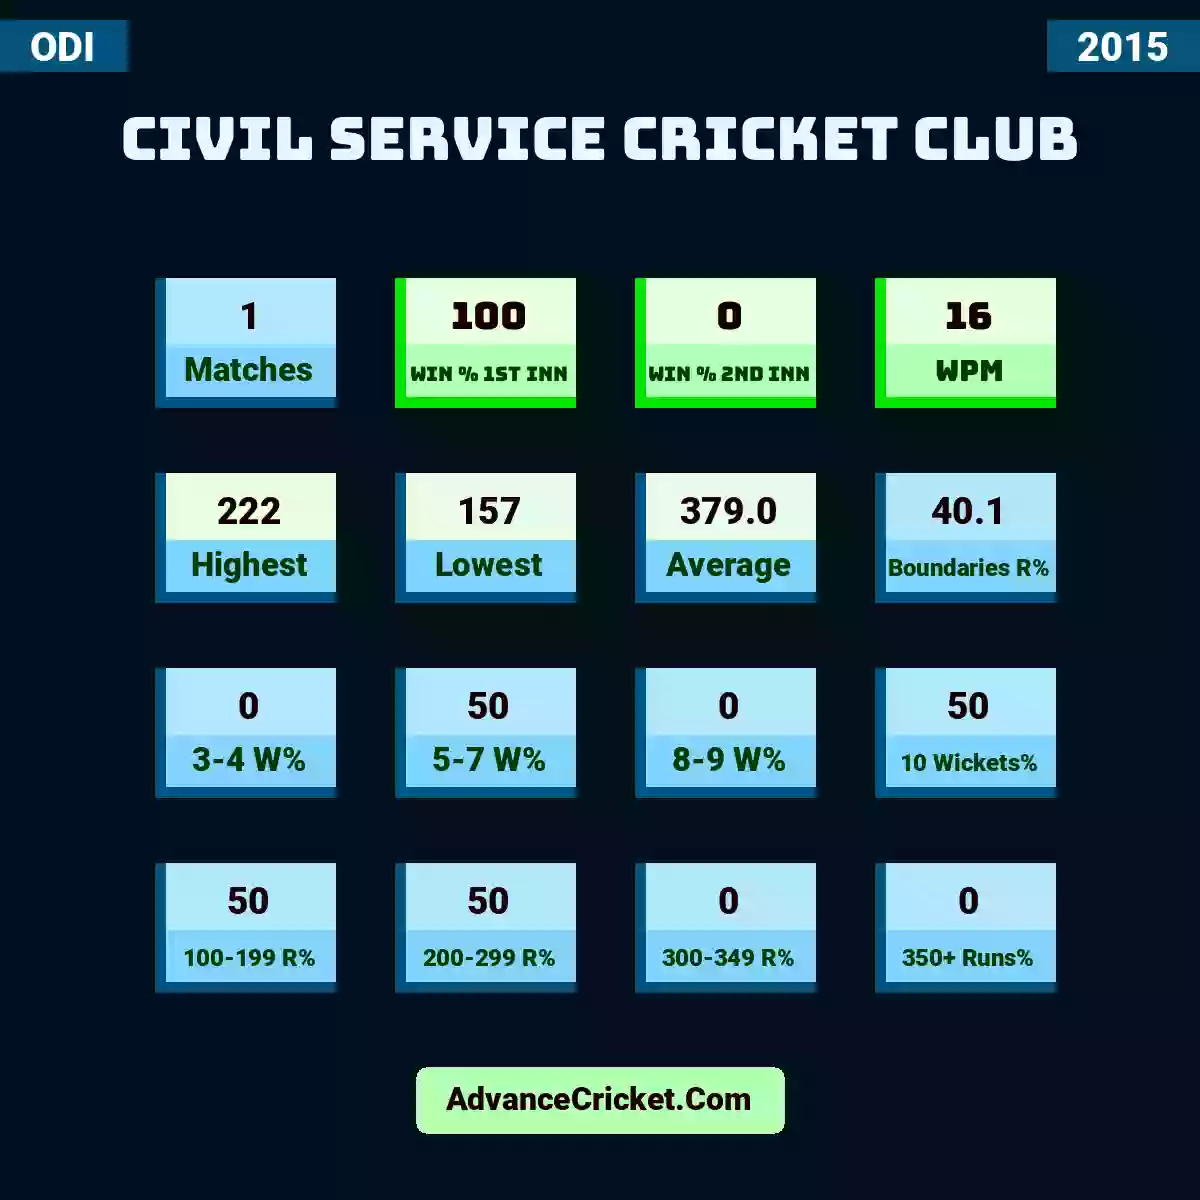 Image showing Civil Service Cricket Club with Matches: 1, Win % 1st Inn: 100, Win % 2nd Inn: 0, WPM: 16, Highest: 222, Lowest: 157, Average: 379.0, Boundaries R%: 40.1, 3-4 W%: 0, 5-7 W%: 50, 8-9 W%: 0, 10 Wickets%: 50, 100-199 R%: 50, 200-299 R%: 50, 300-349 R%: 0, 350+ Runs%: 0.